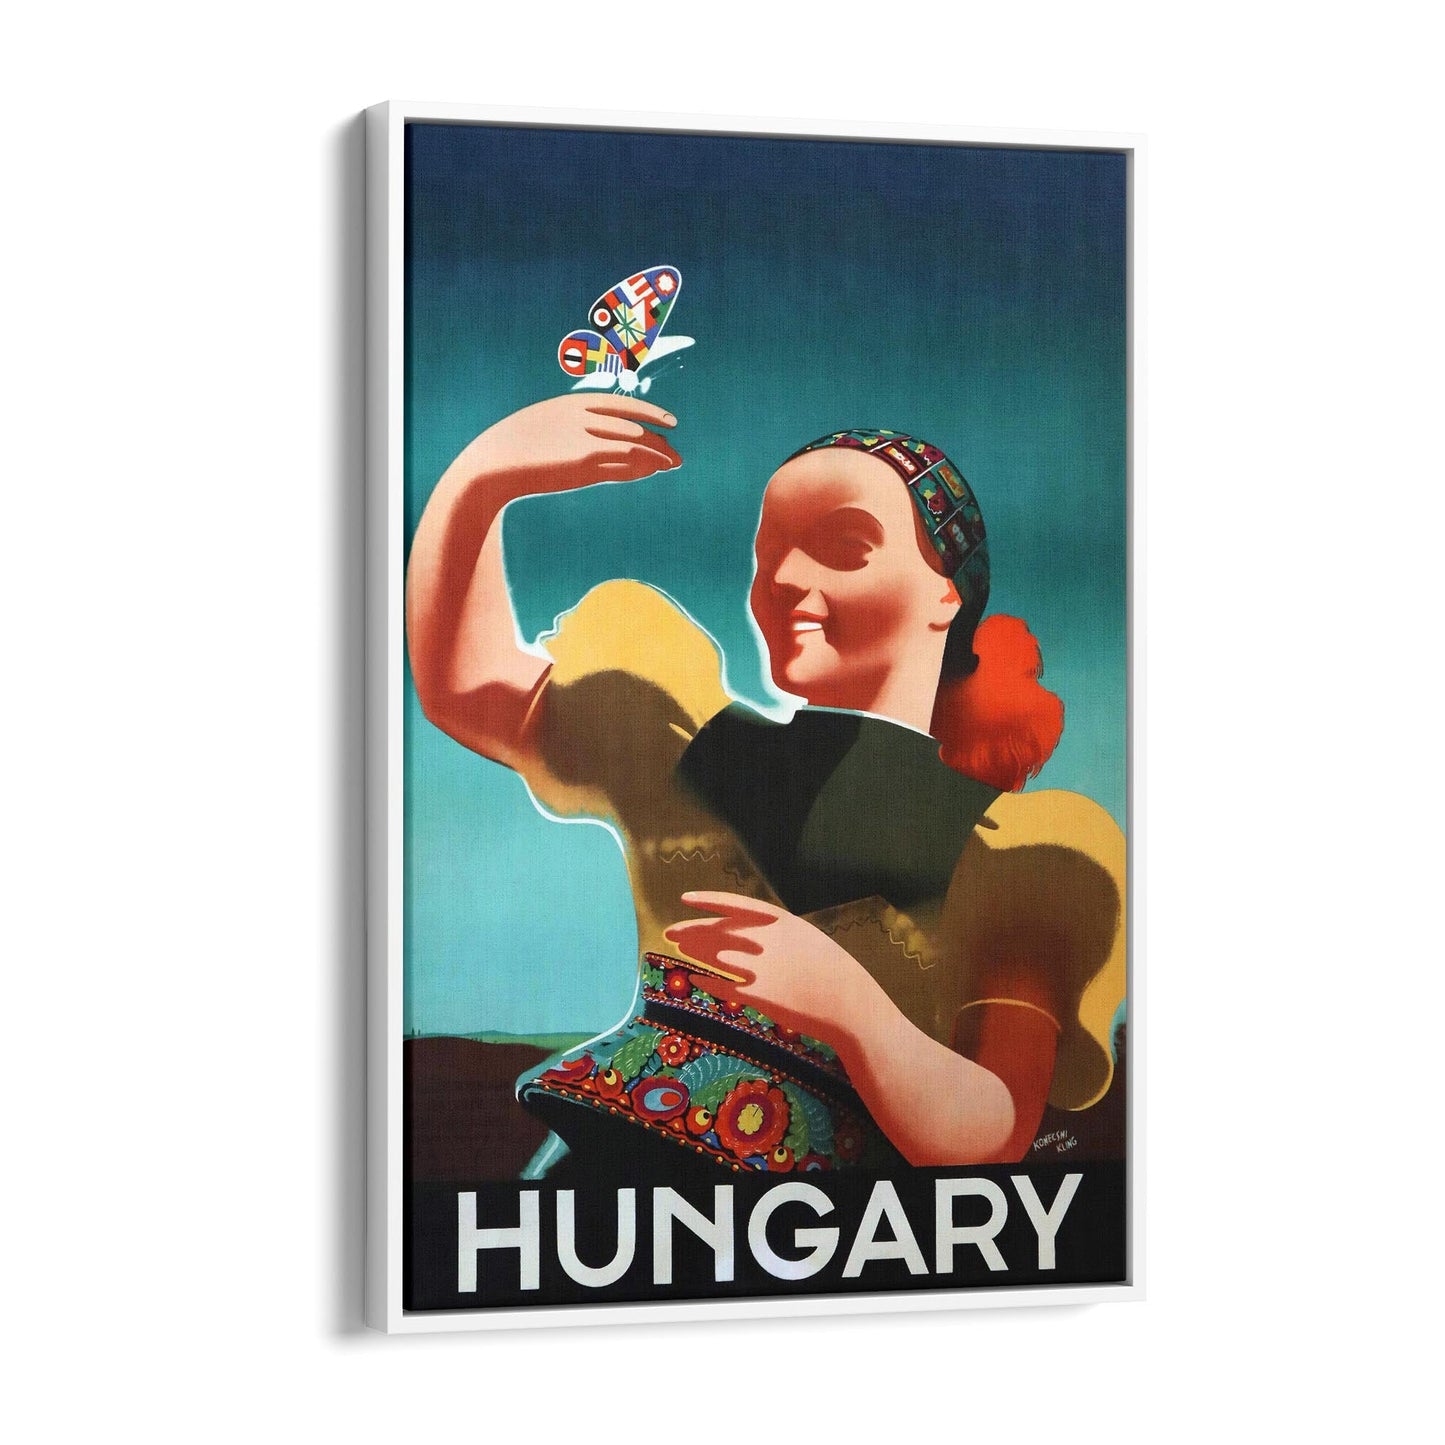 Hungary by Konecsni Kling | Framed Canvas Vintage Travel Advertisement